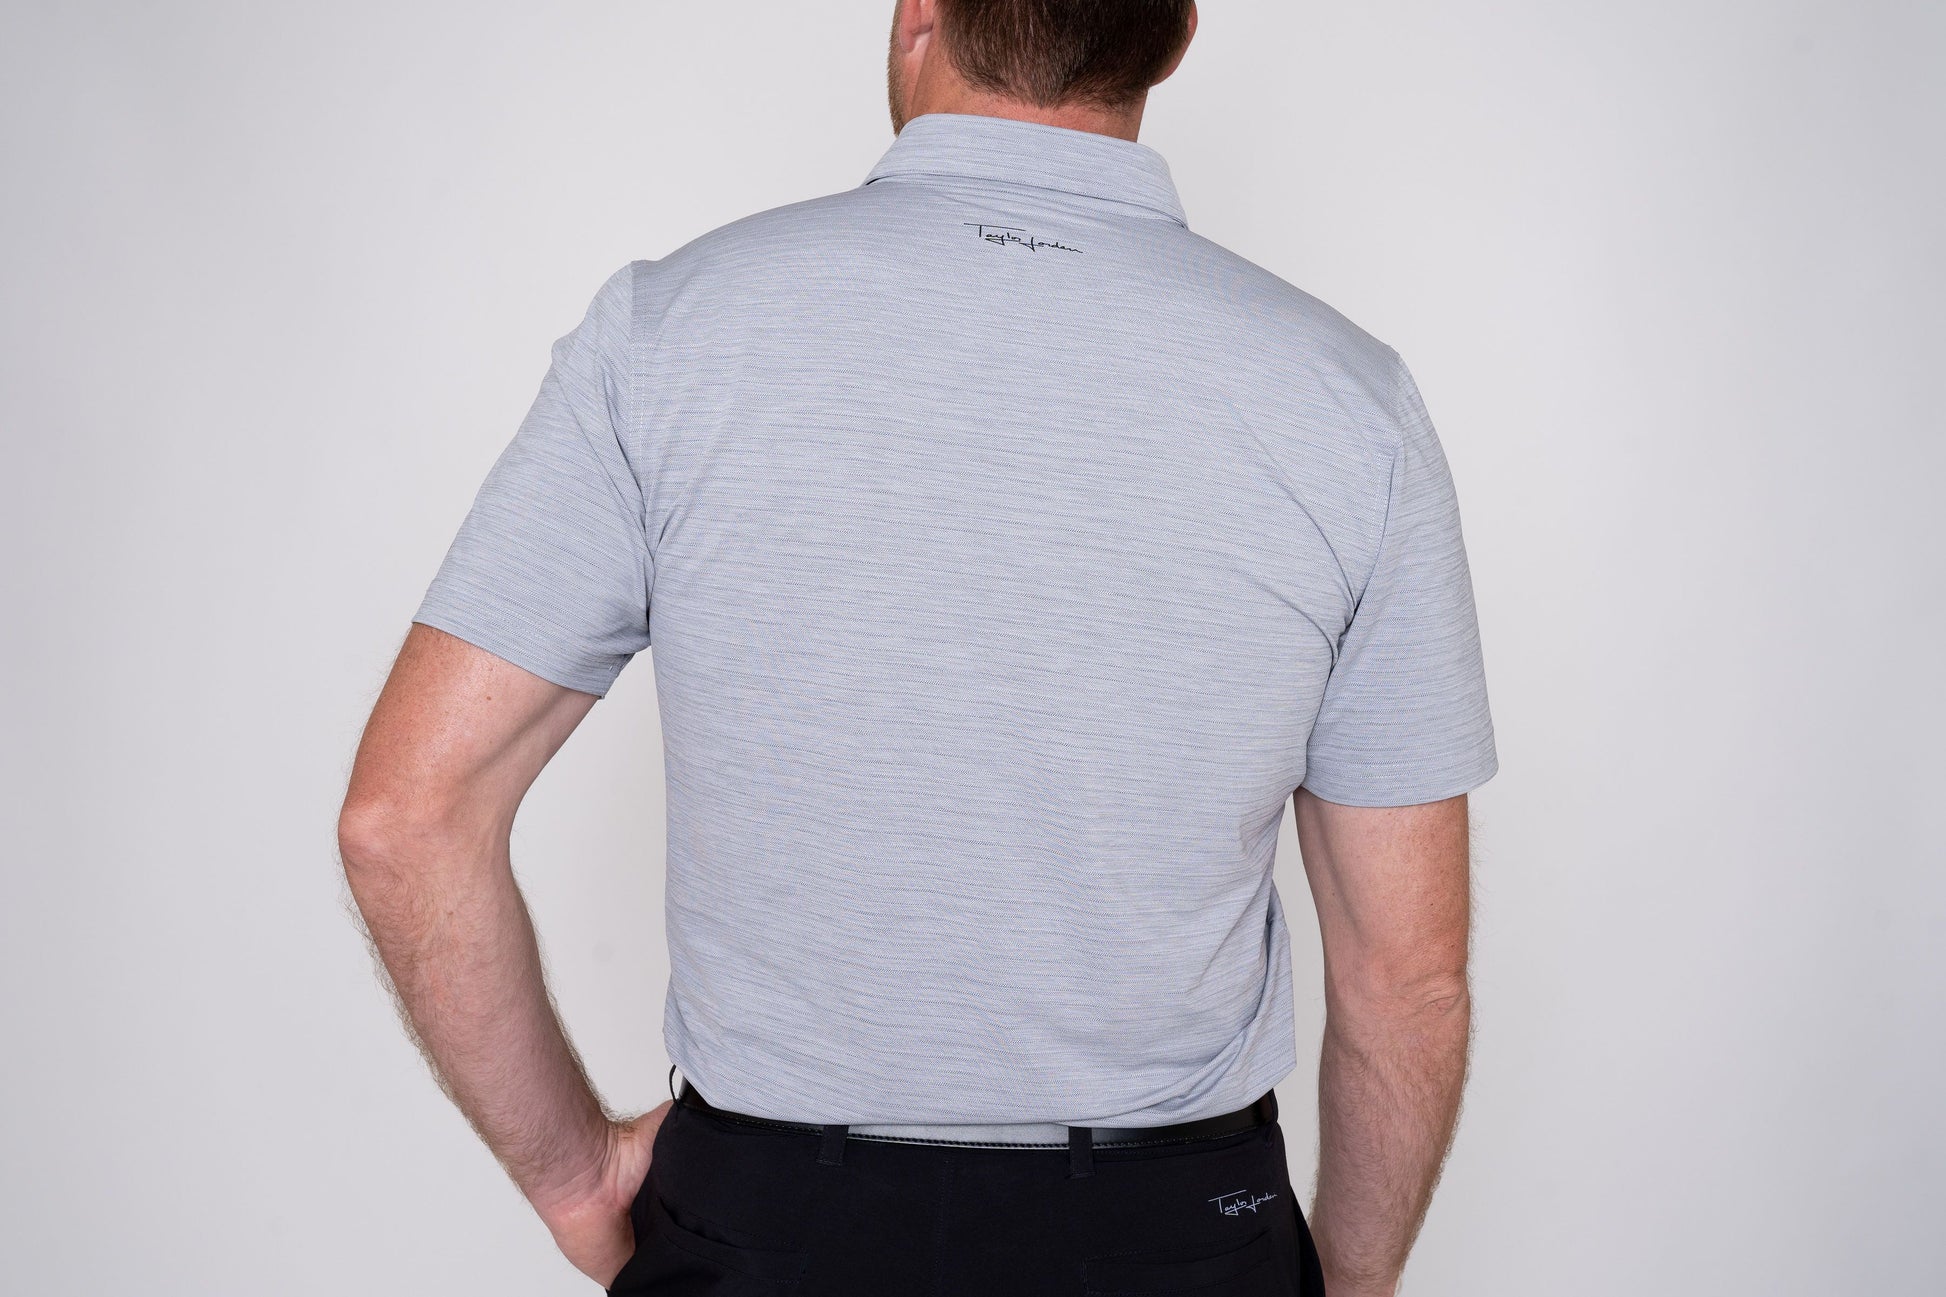 TJ Golf Shirt 2.0 - Grey Men's Golf Shirt Taylor Jordan Apparel 